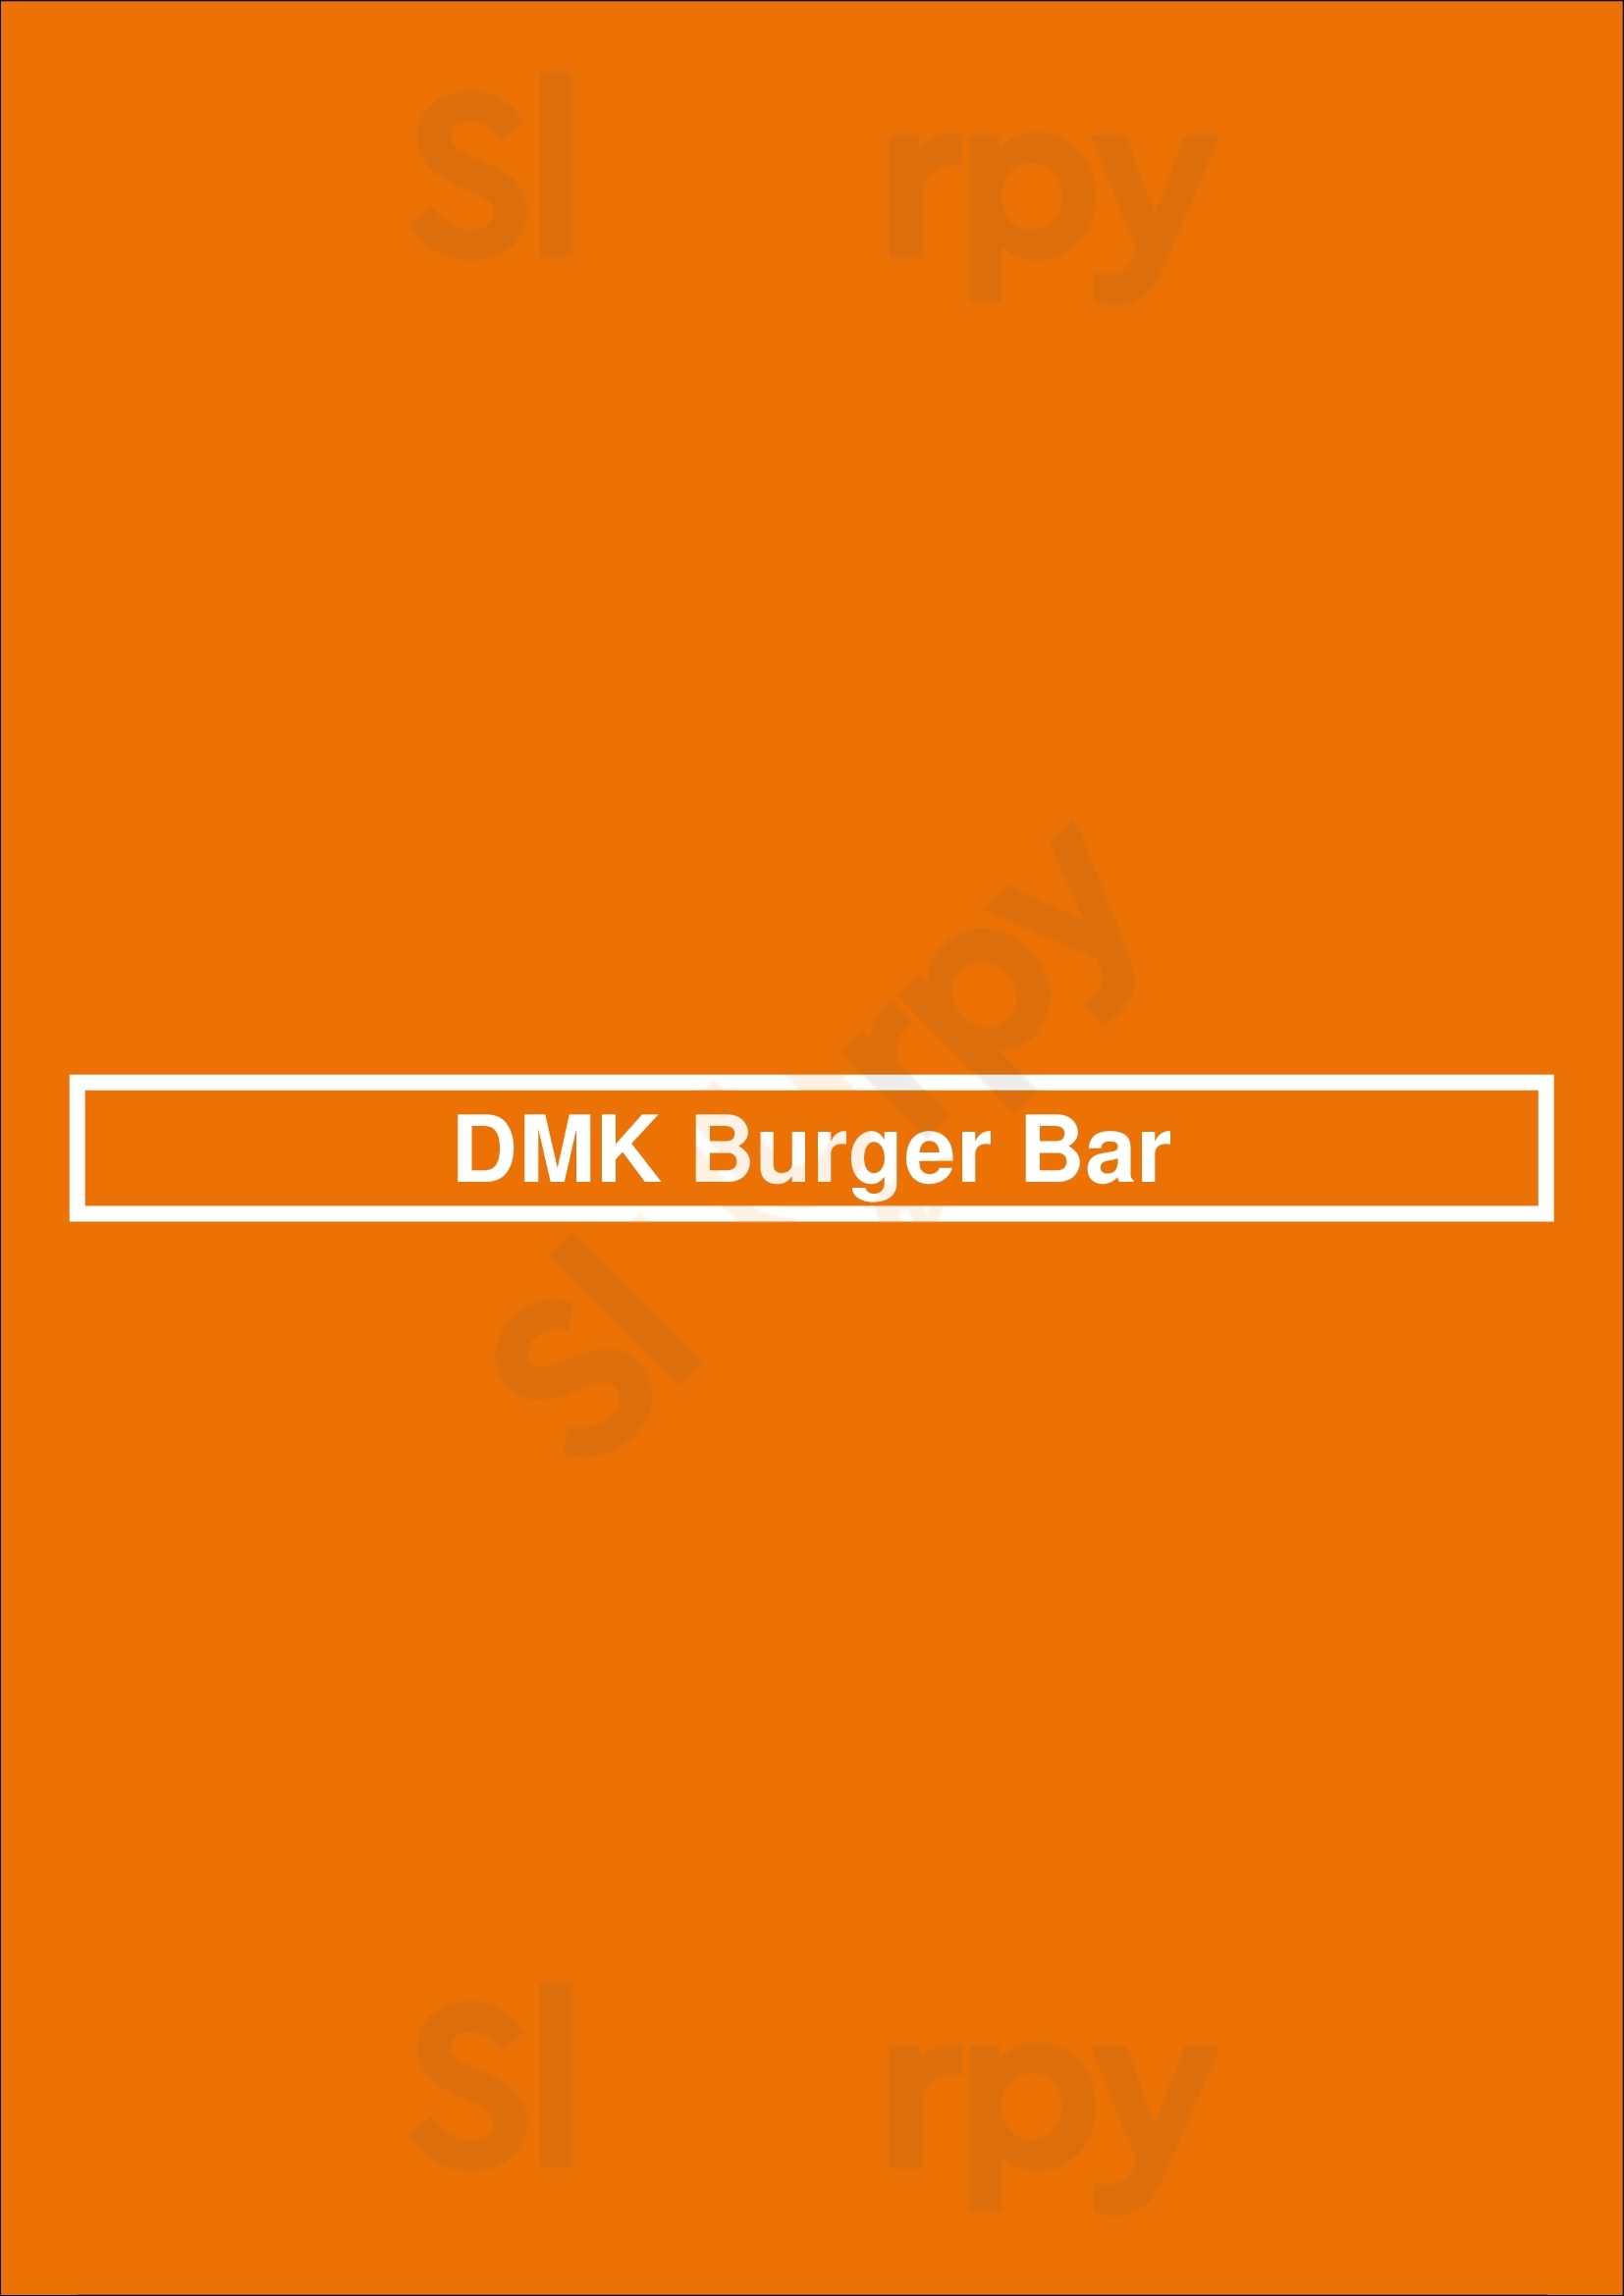 Dmk Burger Bar Chicago Menu - 1